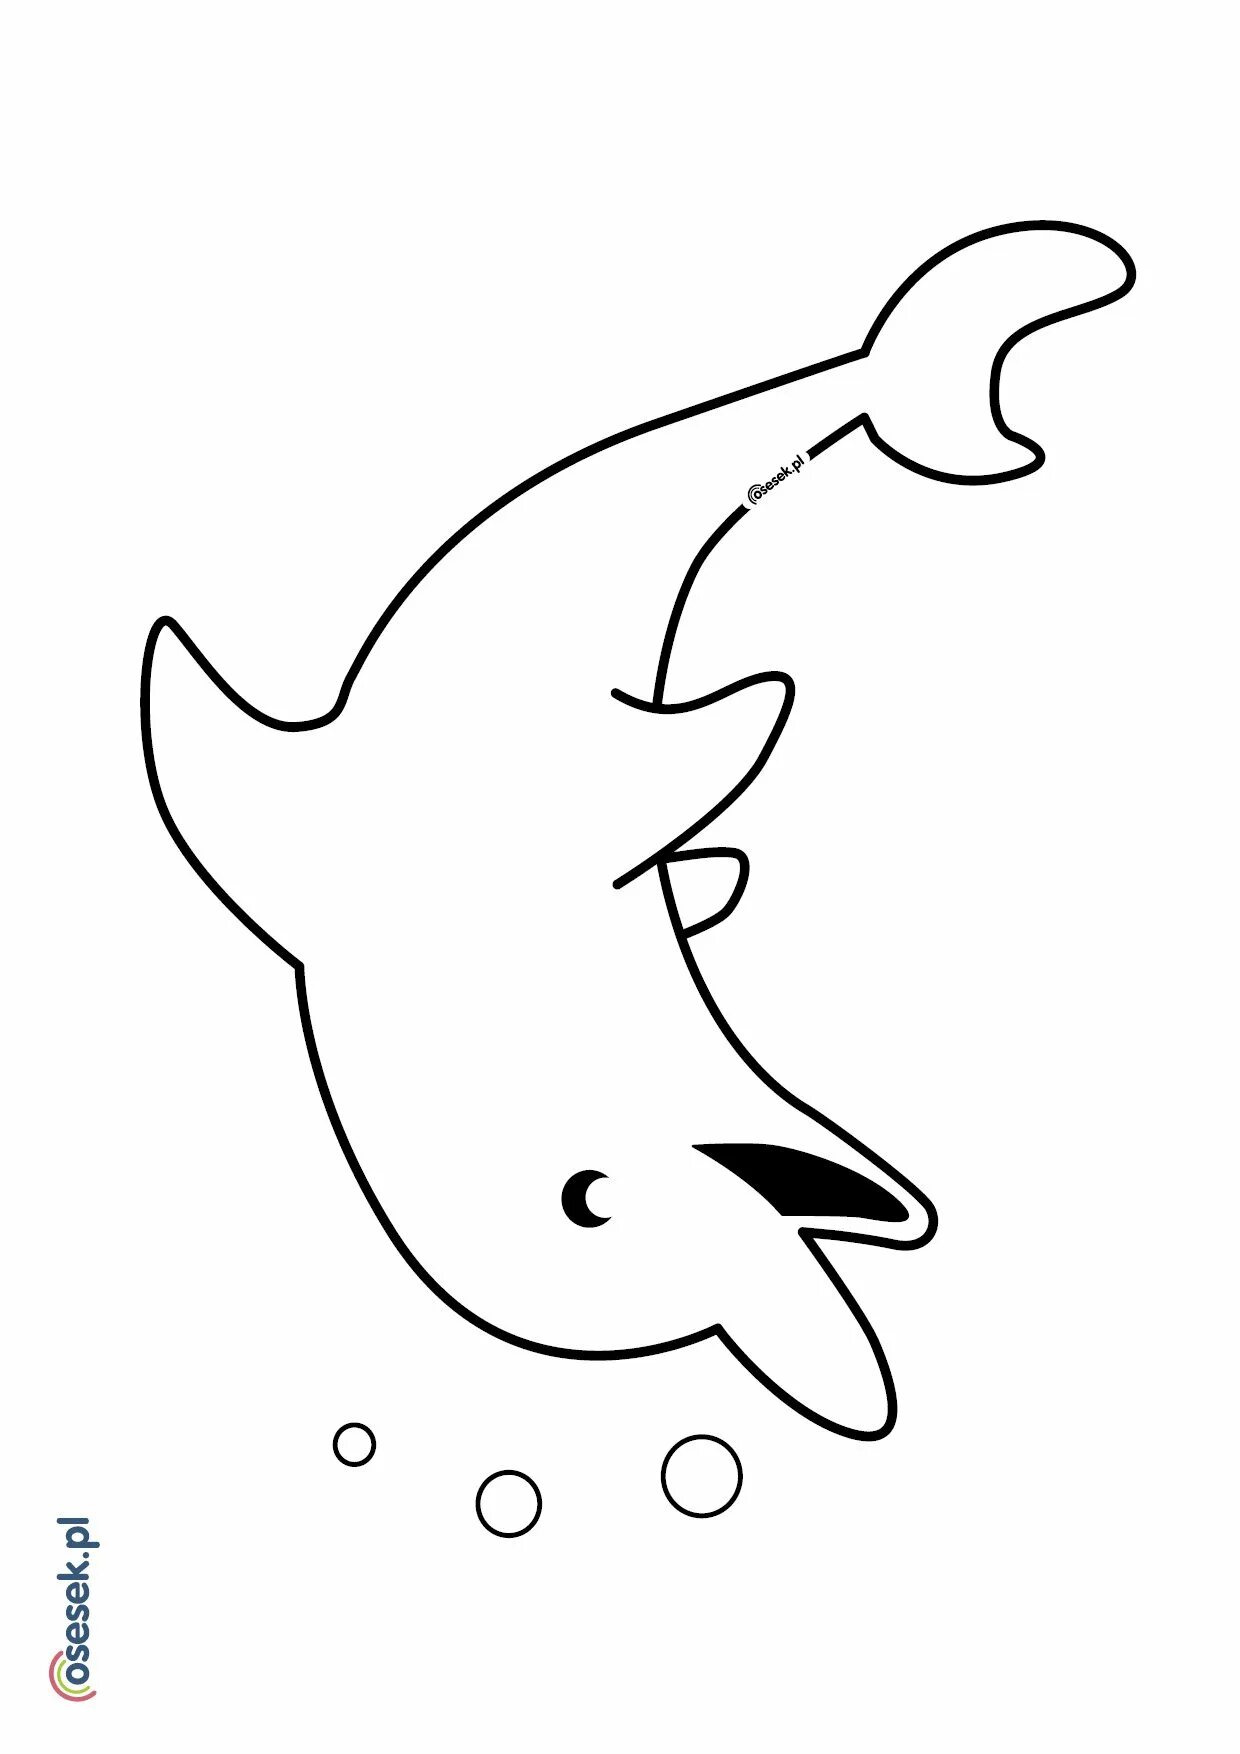 Дельфин единорог. Раскраска Дельфин. Раскраска Дельфинчик. Дельфин Единорог раскраска. Раскраска "дельфины".